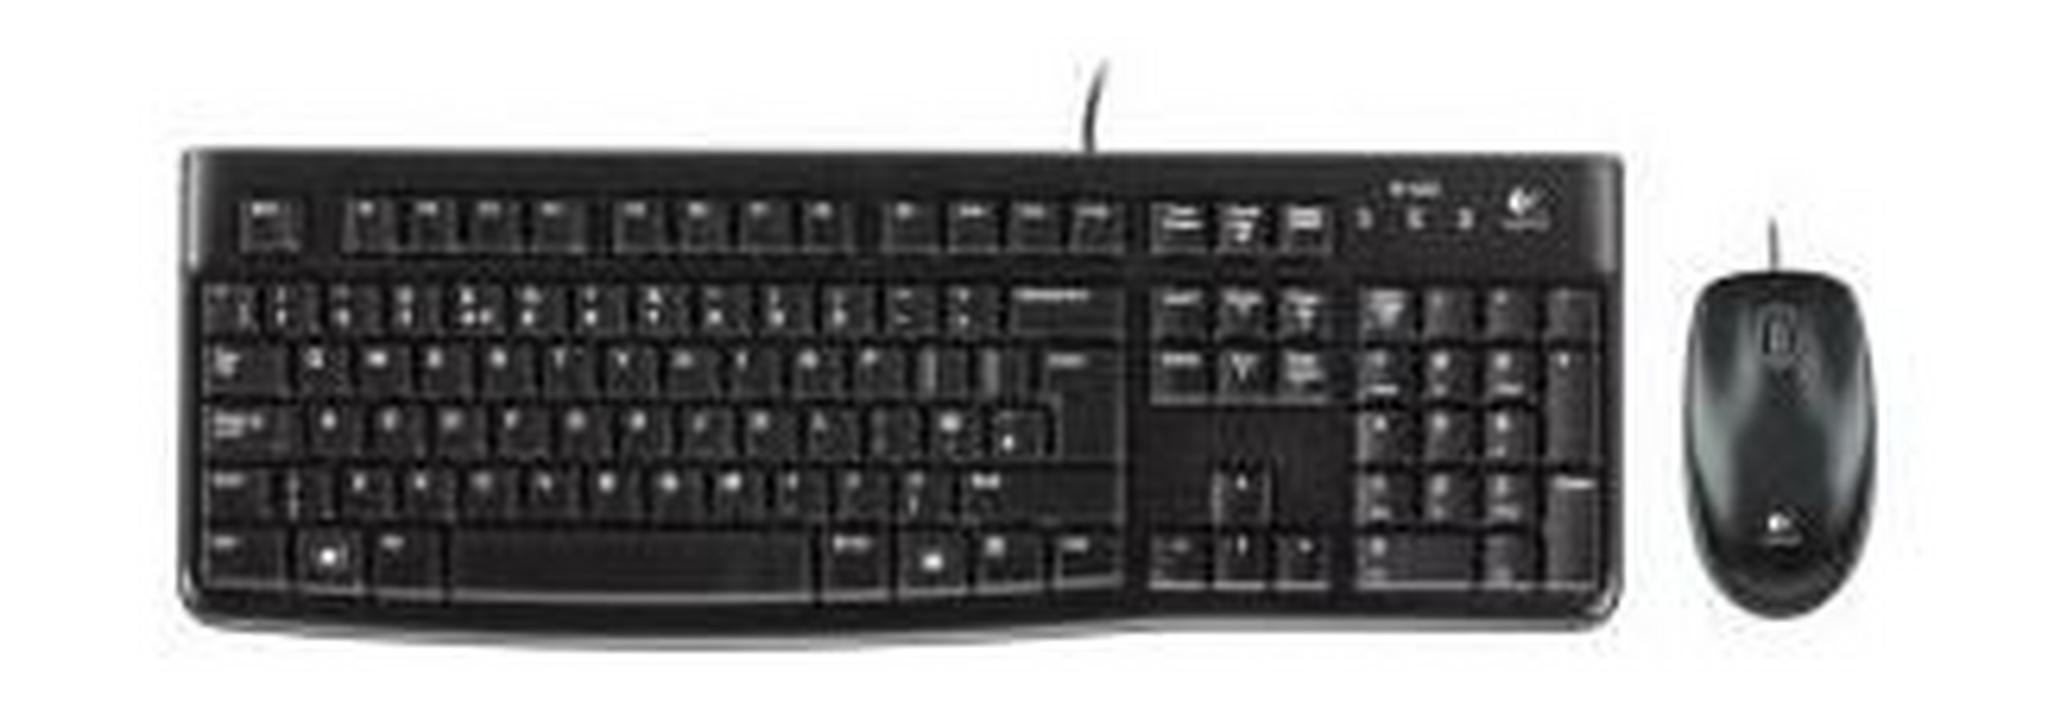 Logitech Wired Keyboard and Mouse - MK120 (920-002546) English/Arabic